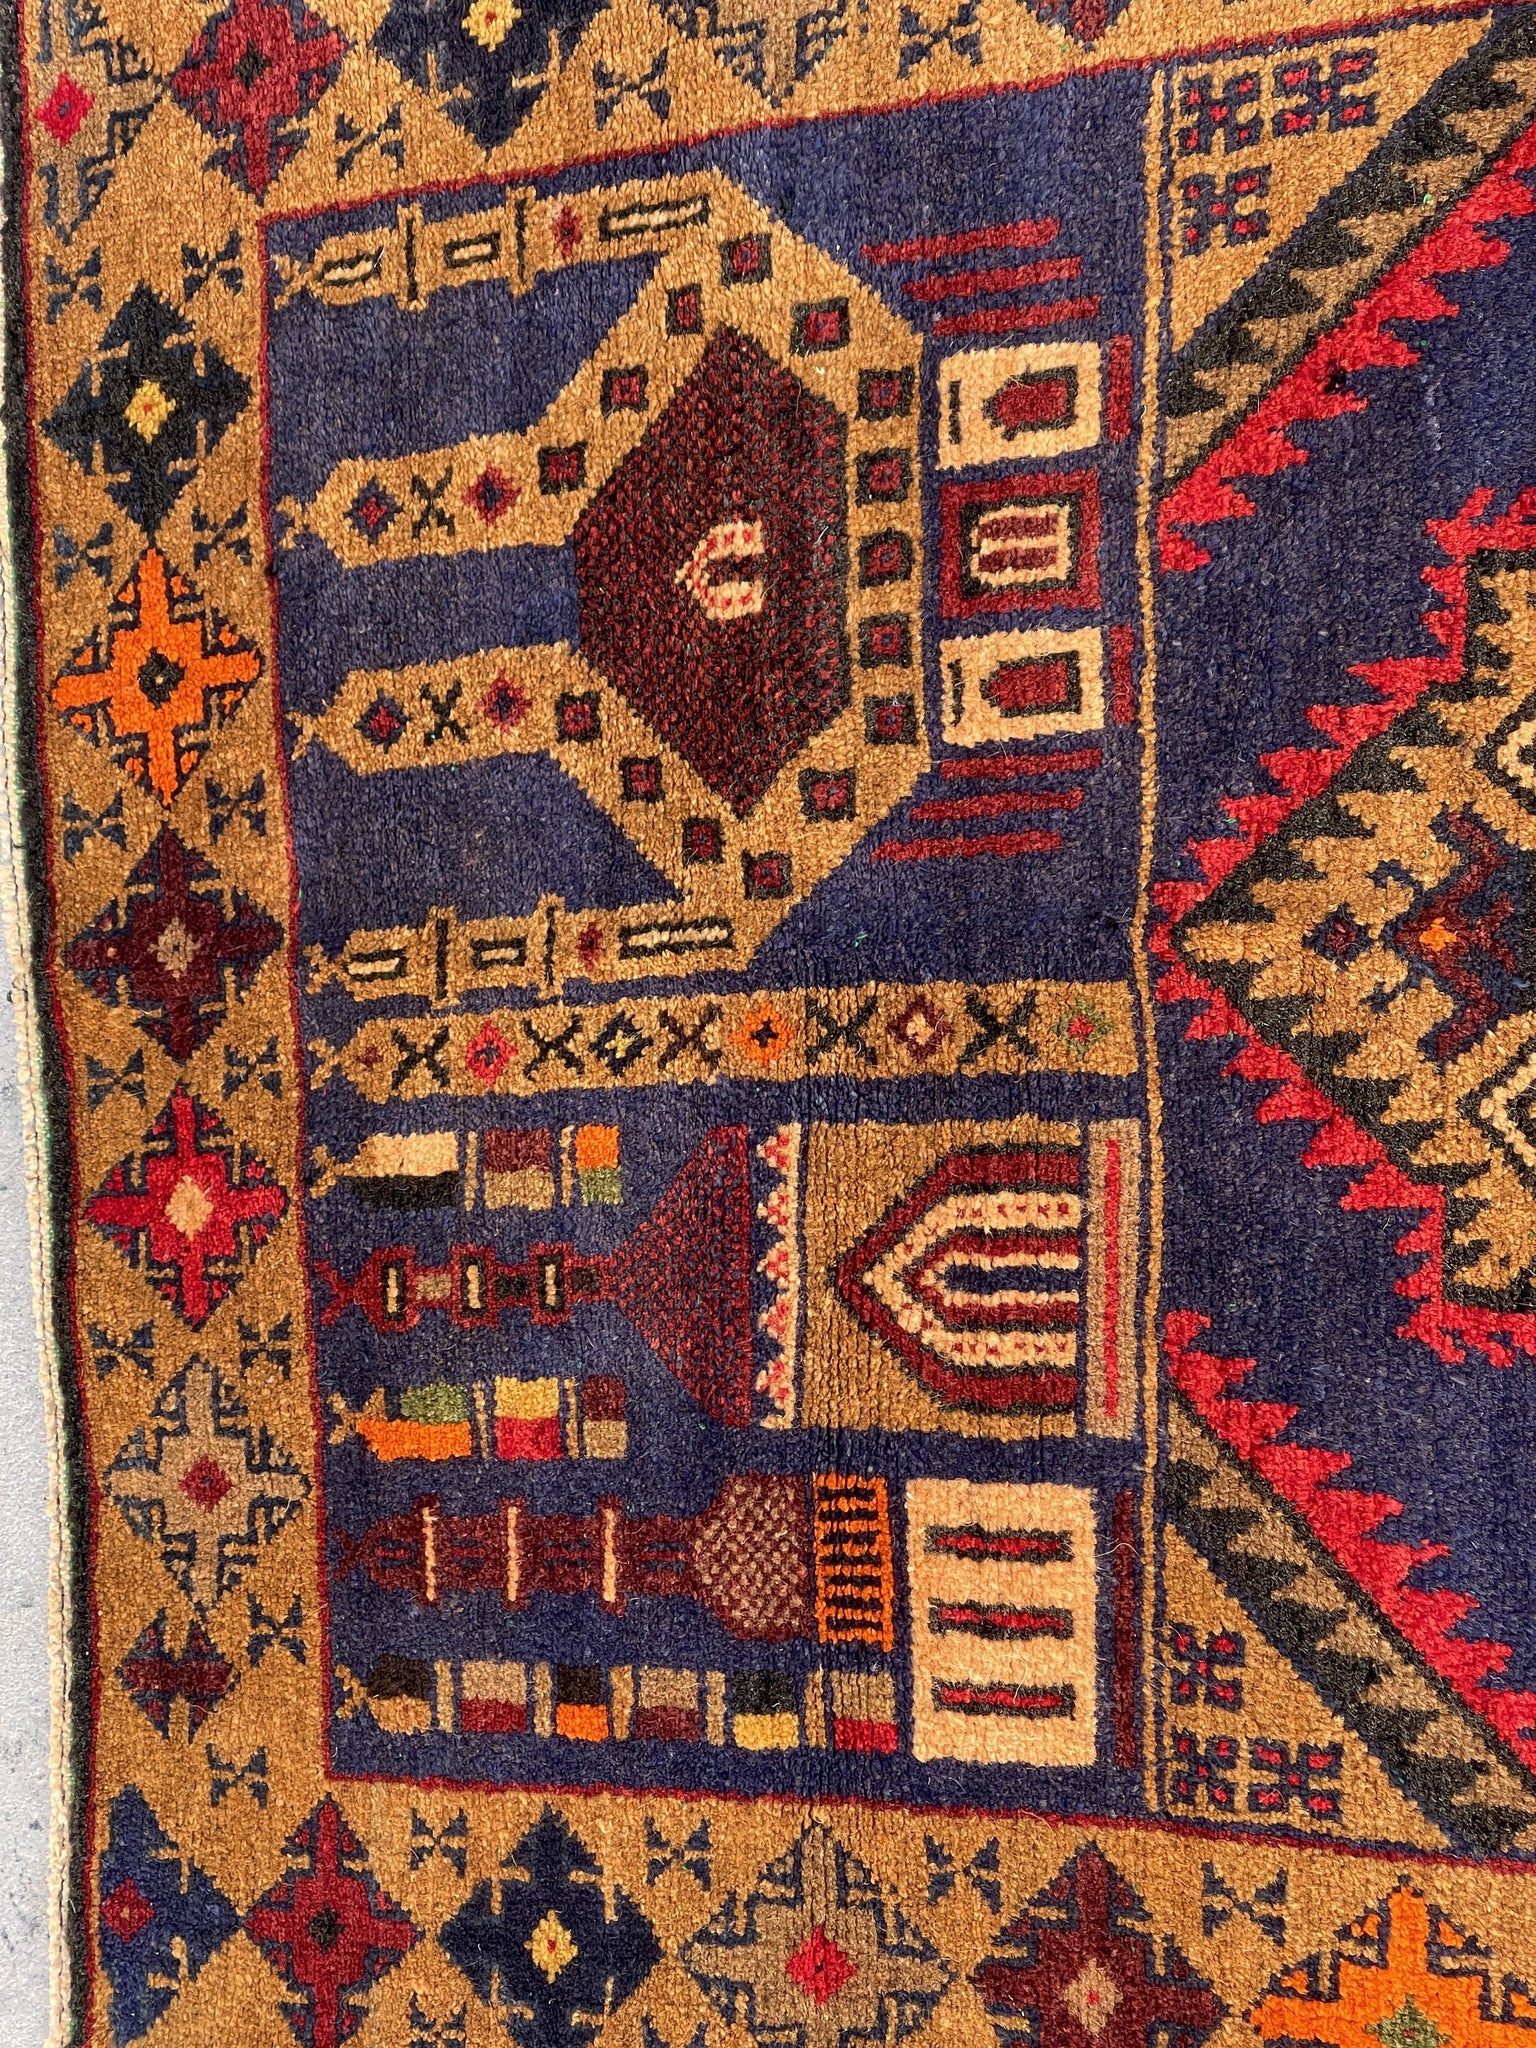 3x5 (90x150) Handmade Vintage Afghan Rug | Gold Navy Blue Red | Nomadic Baluch Boho Bohemian Tribal Turkish Moroccan Wool